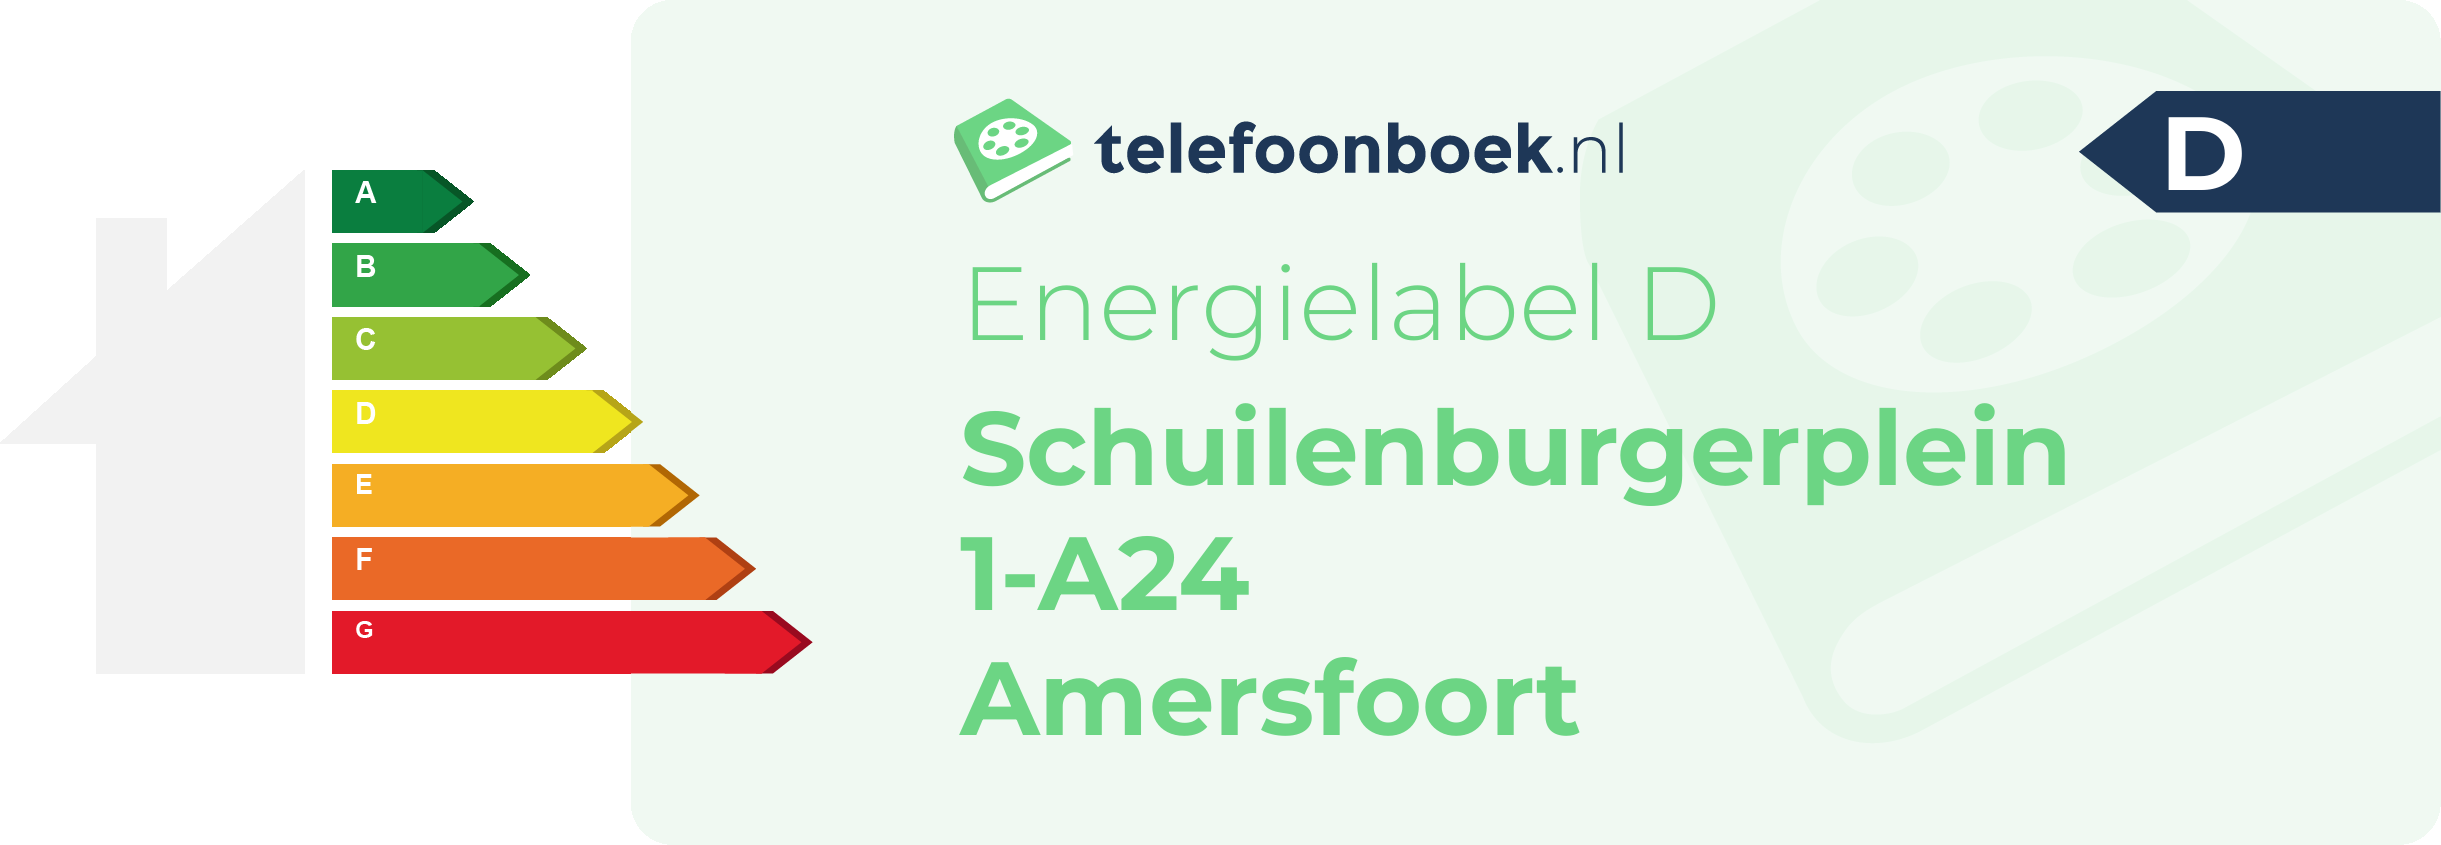 Energielabel Schuilenburgerplein 1-A24 Amersfoort